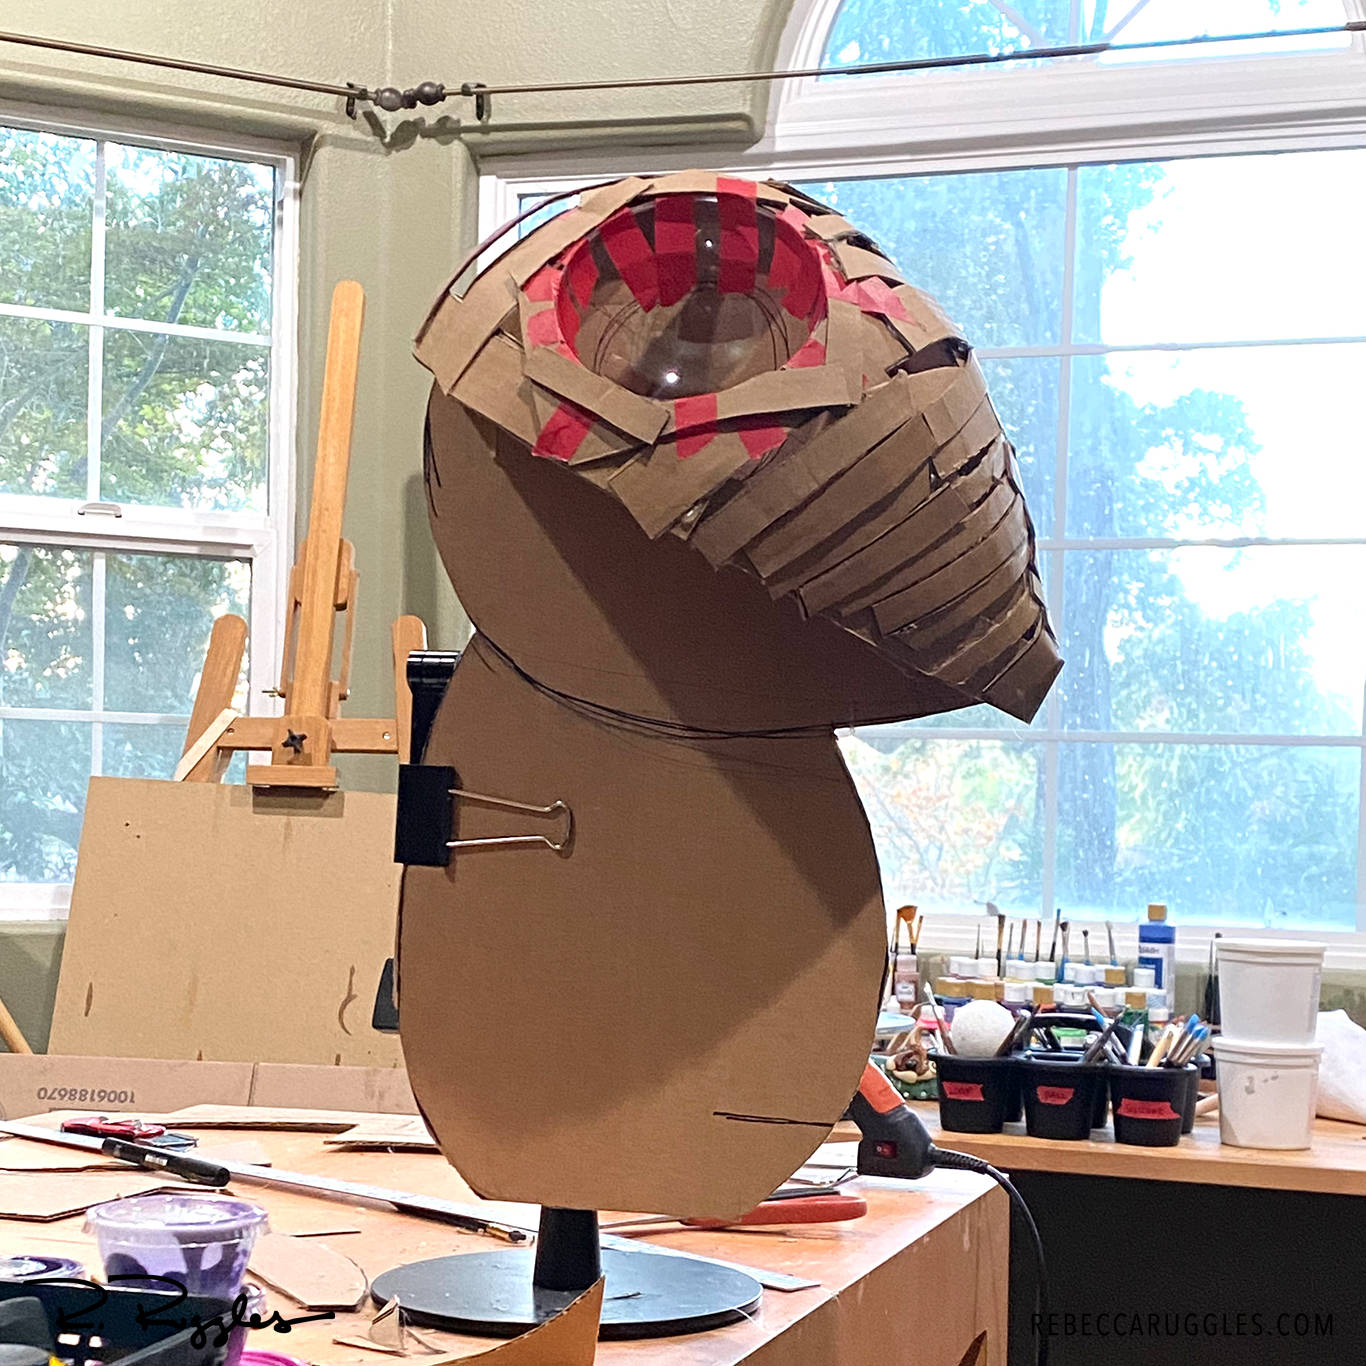 Cardboard sculpture armature of giant Nuff bird being built.